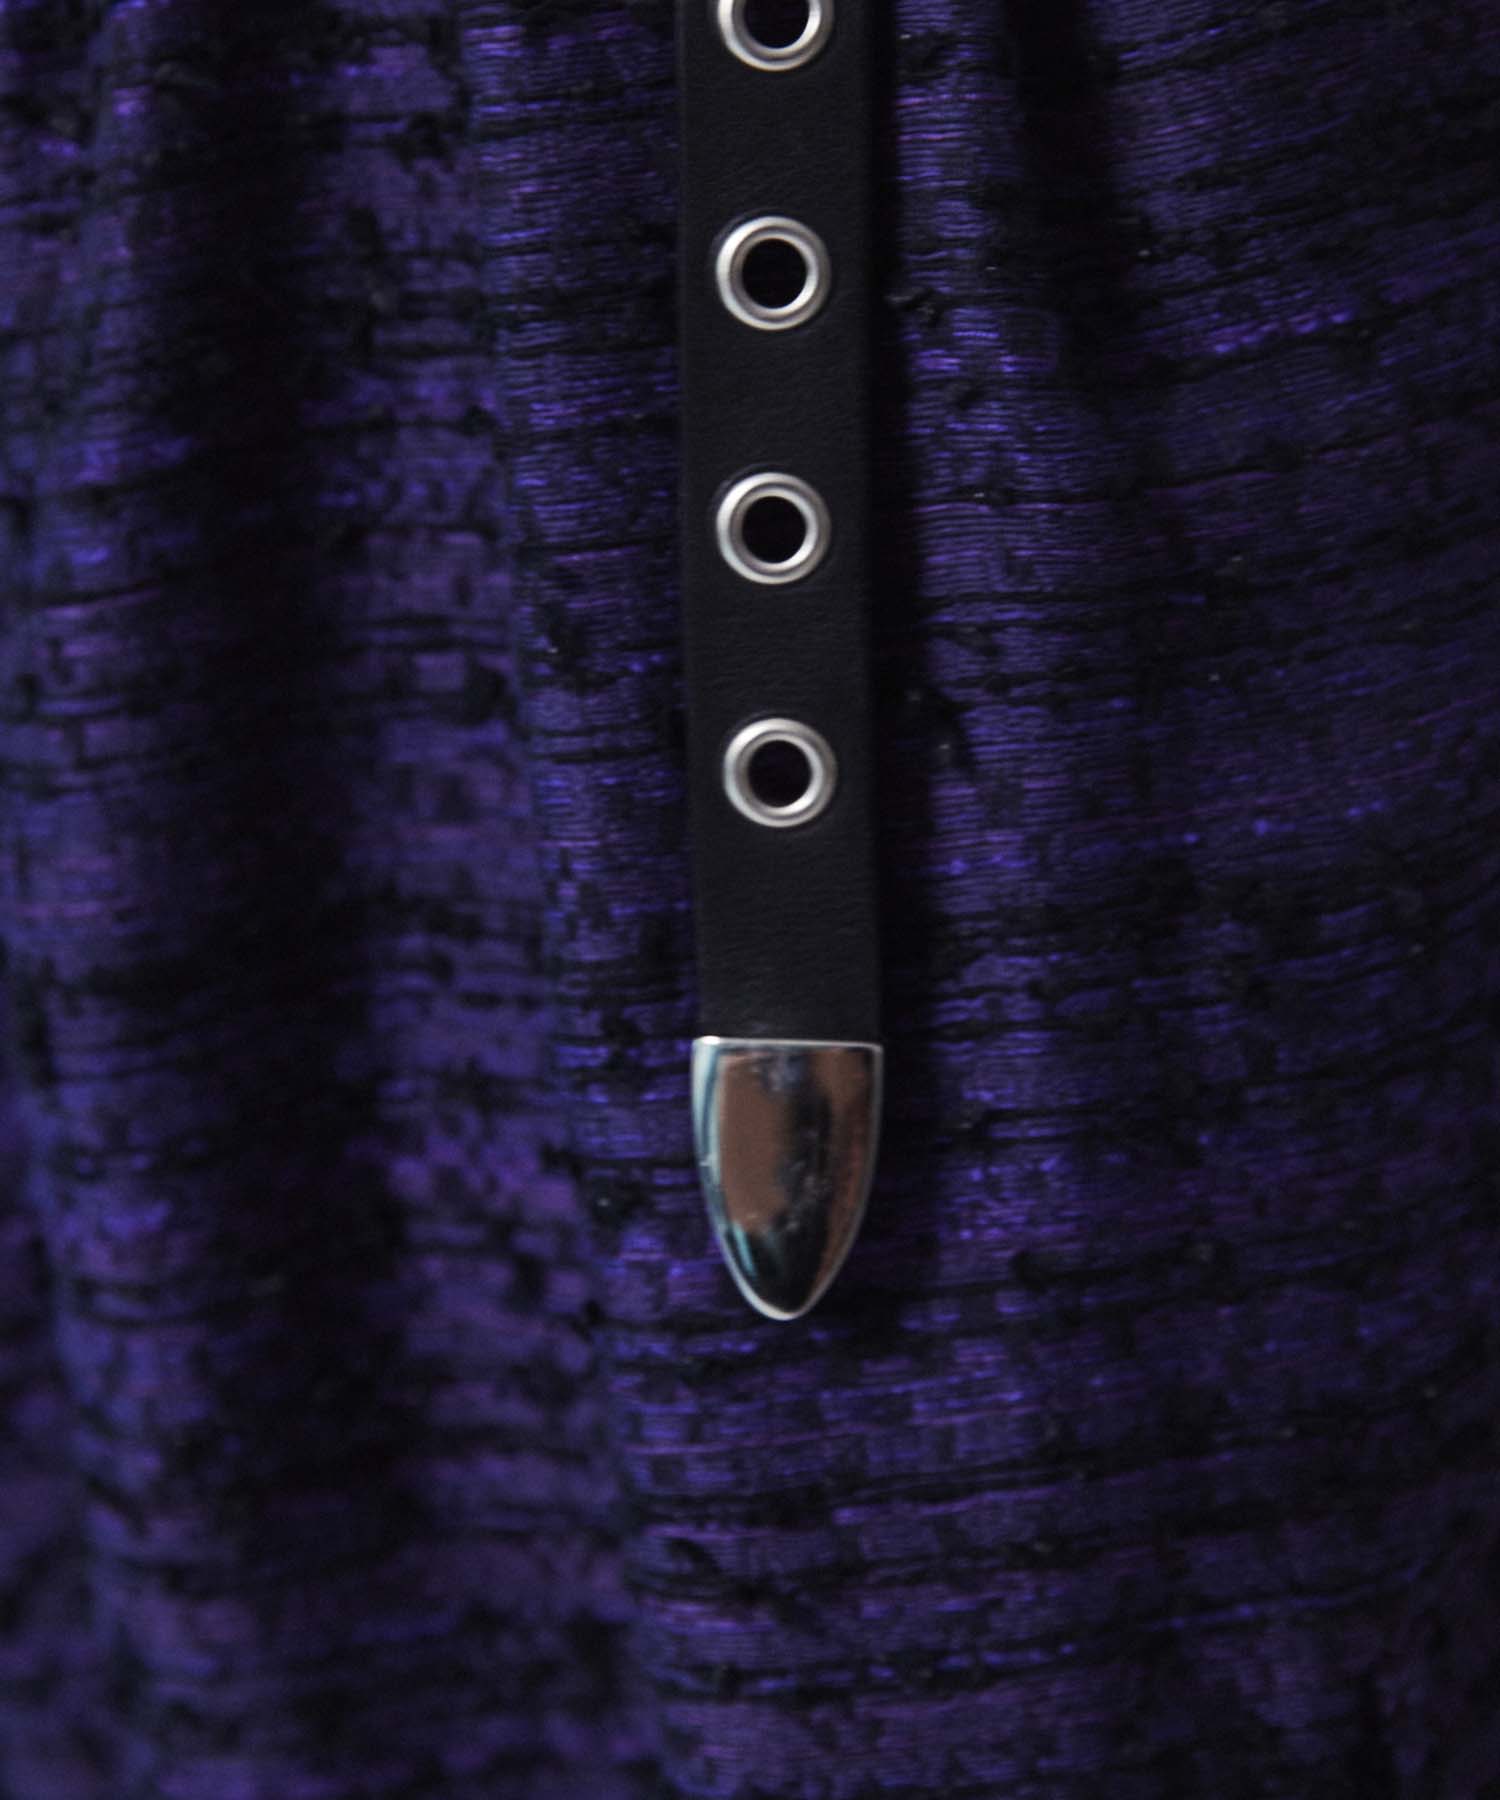 【PRE-ORDER】20mm Width Eyelet Leather Long Belt